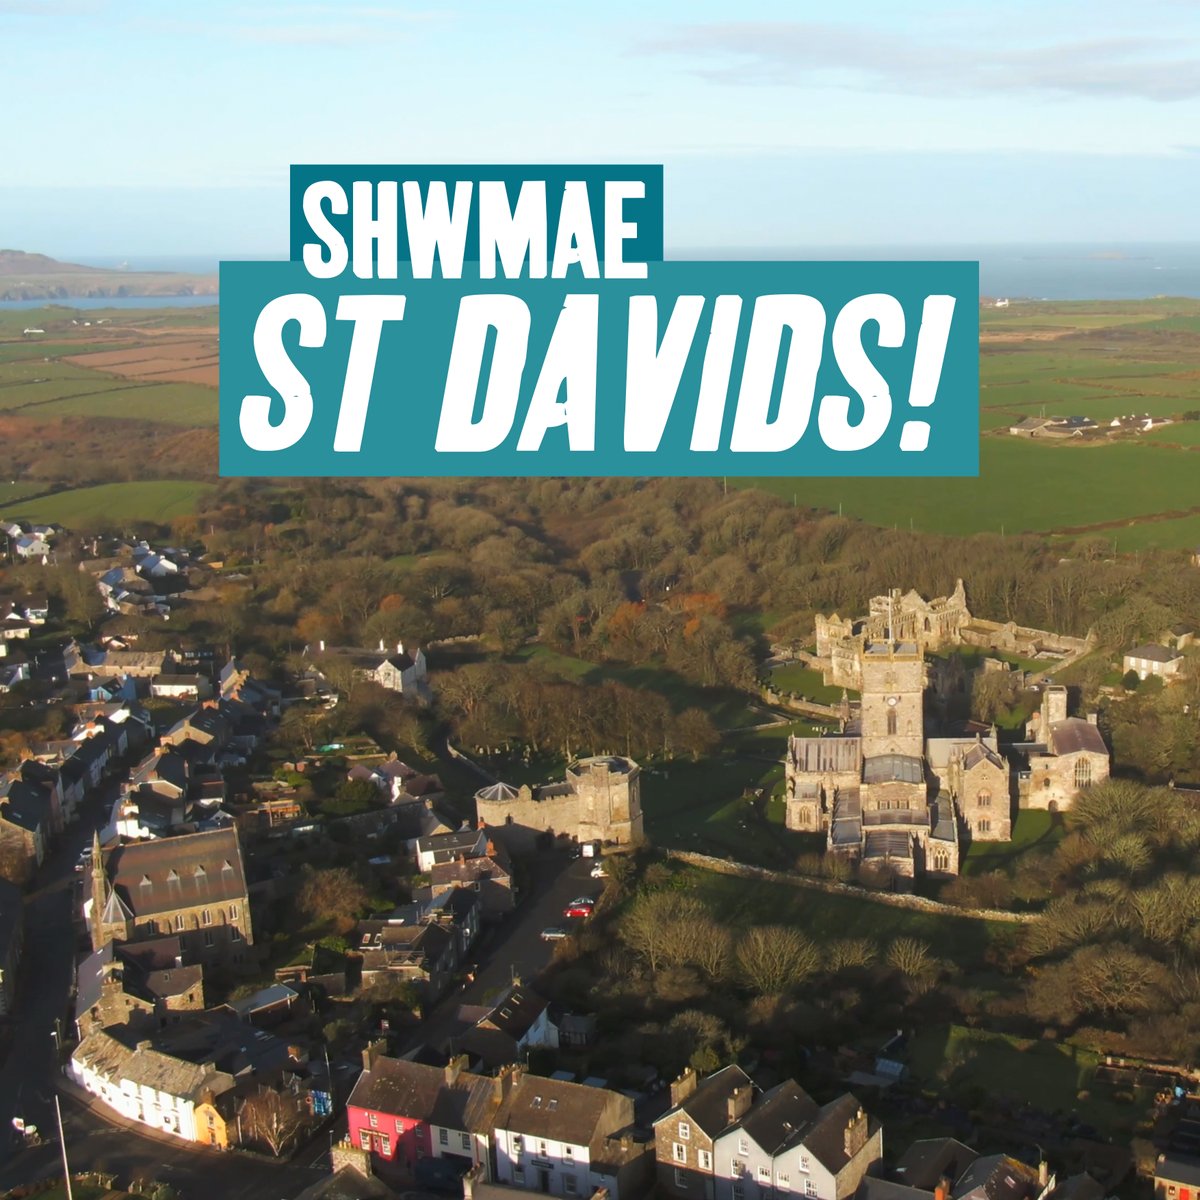 1/3 SHWMAE ST DAVIDS! - We are extremely excited to announce MamGu Welshcakes is COMING TO THE CITY! 🤩🙌🏼
#mamguwelshcakes #madeinthelandofdragons #stdavids #pembrokeshire #cymru